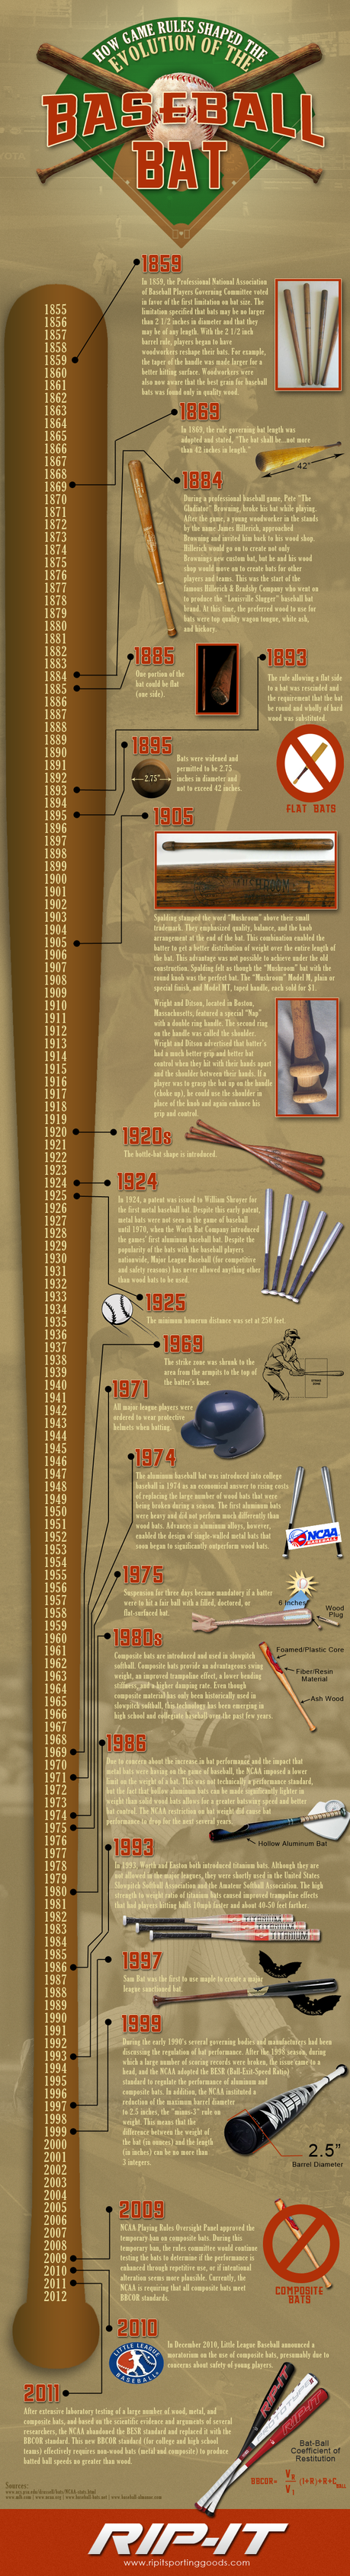 Baseball Bat History Infographic